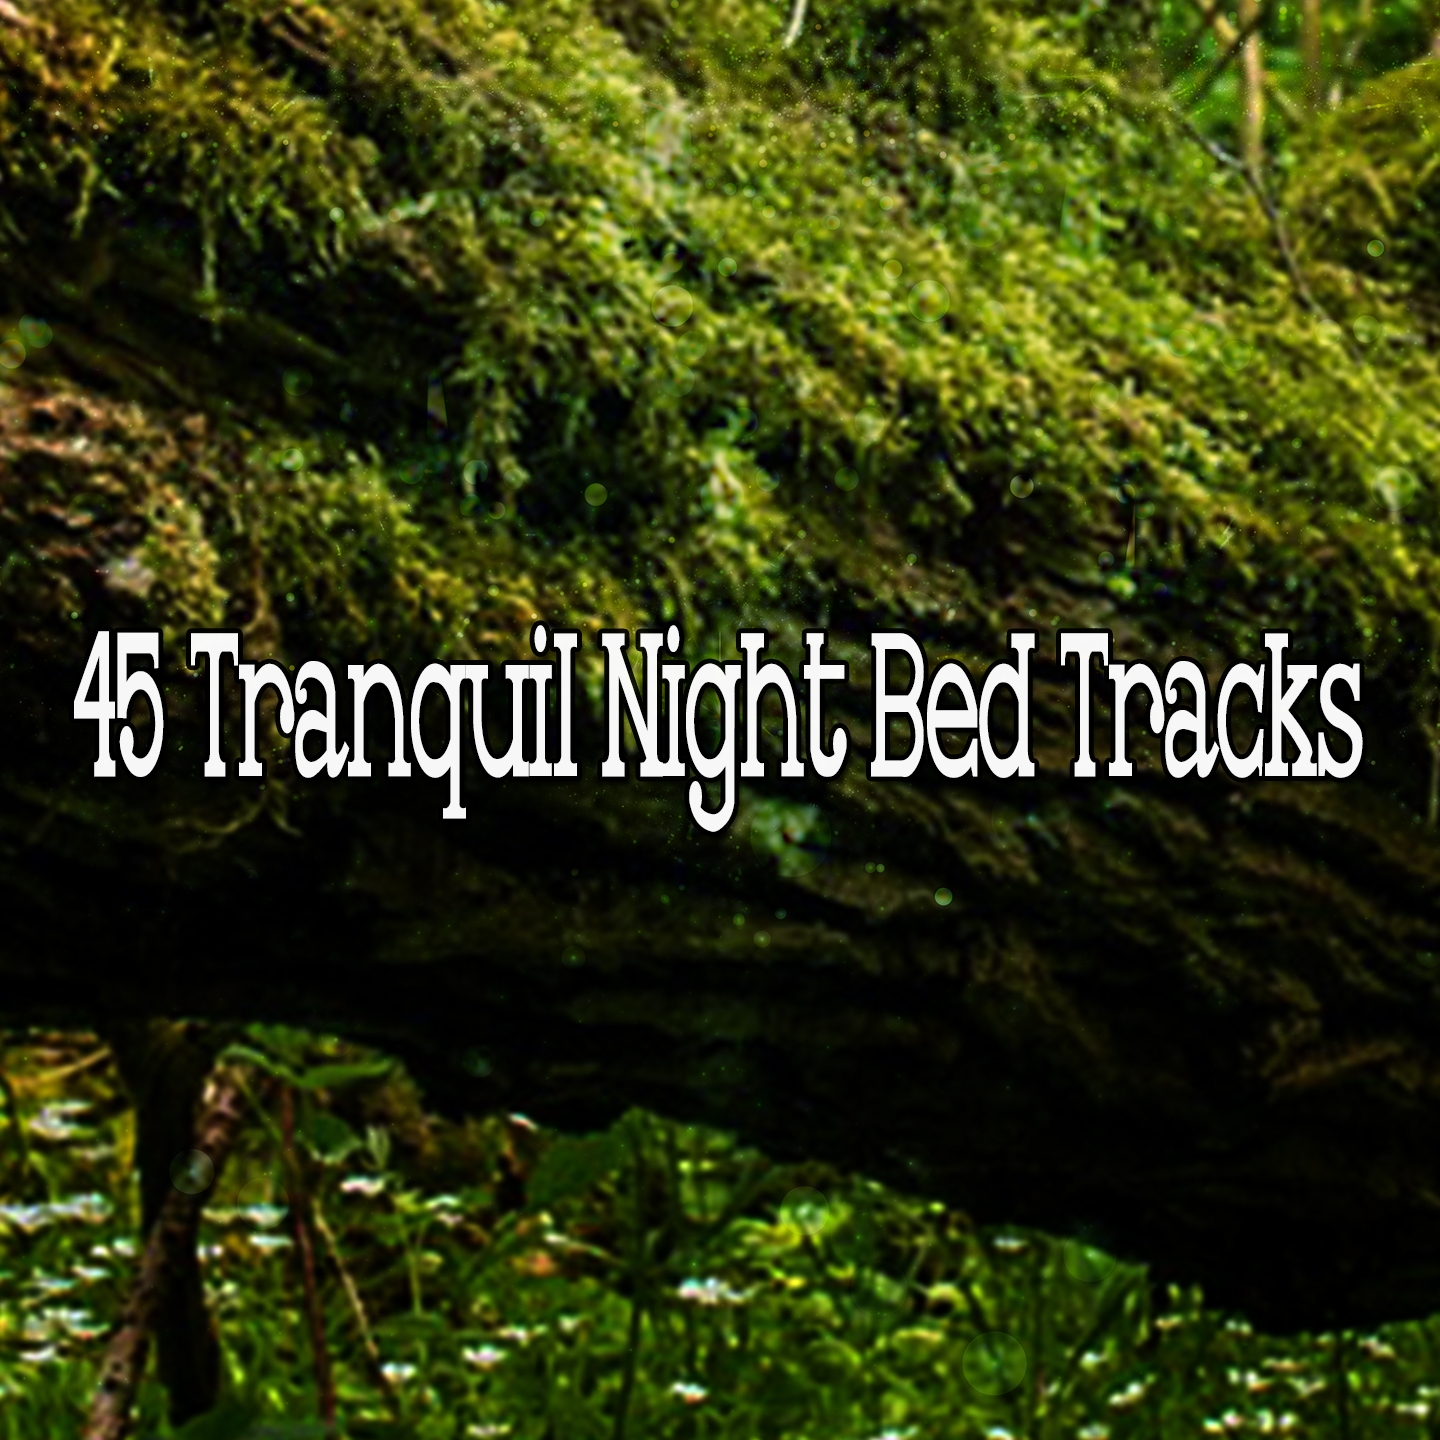 45 Tranquil Night Bed Tracks